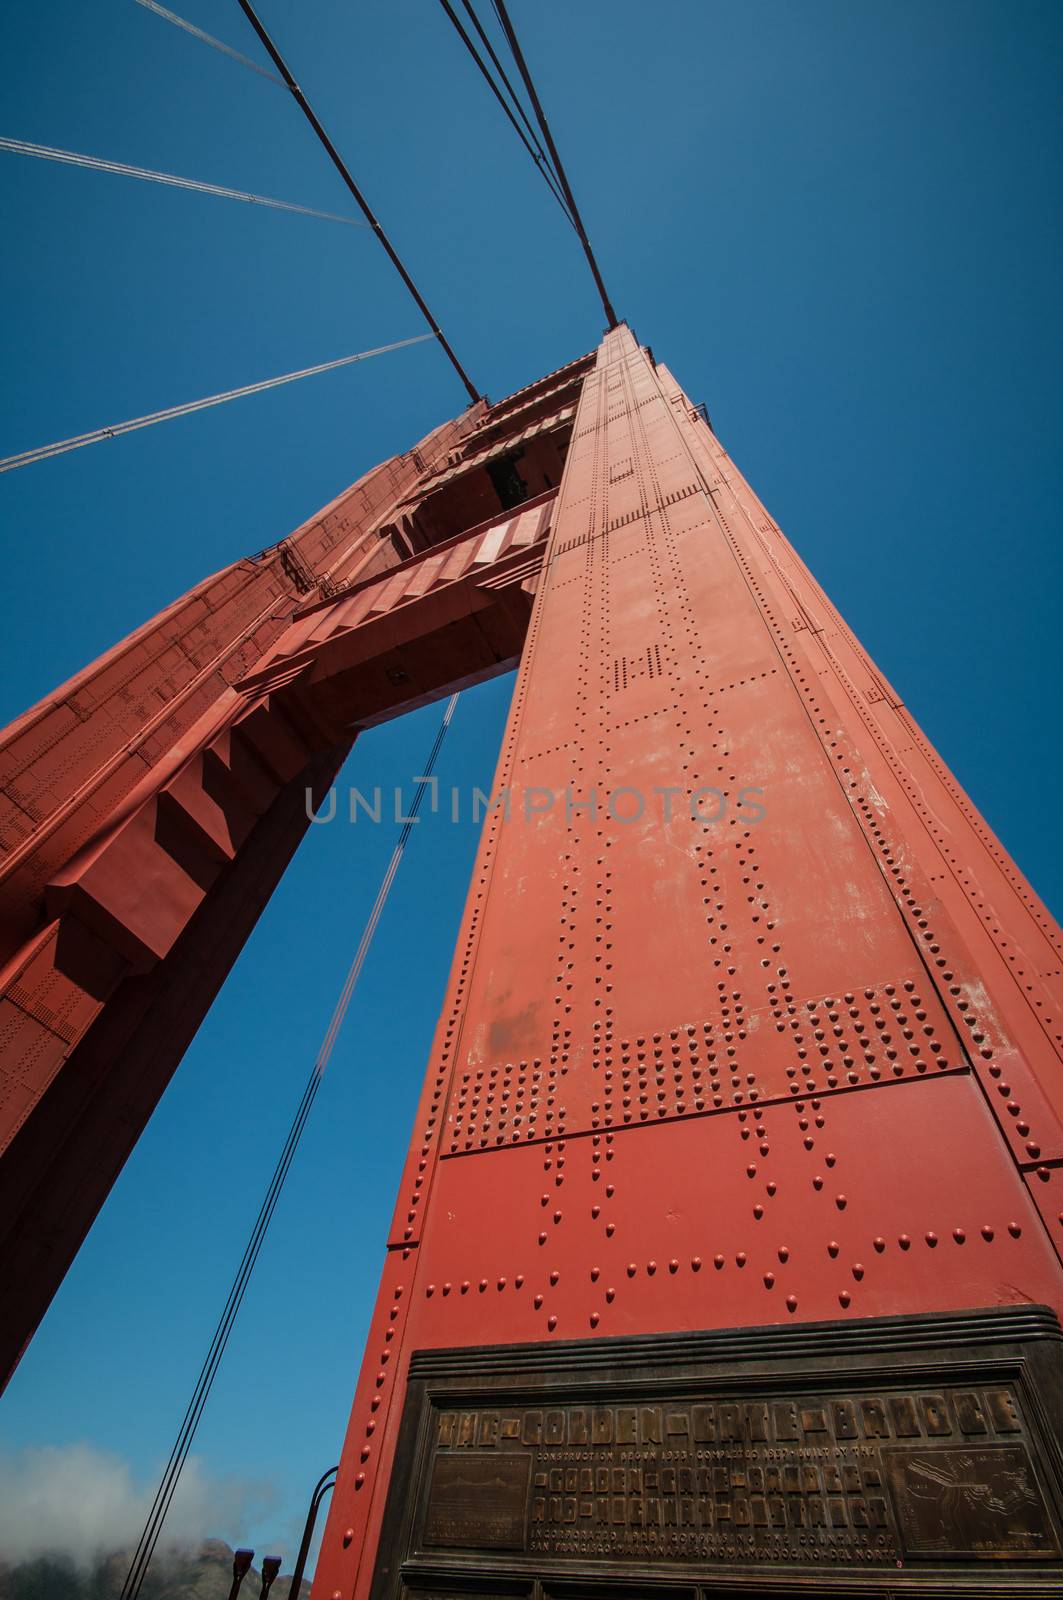 Golden Gate sign on Bridge in San Francisco, California, USA